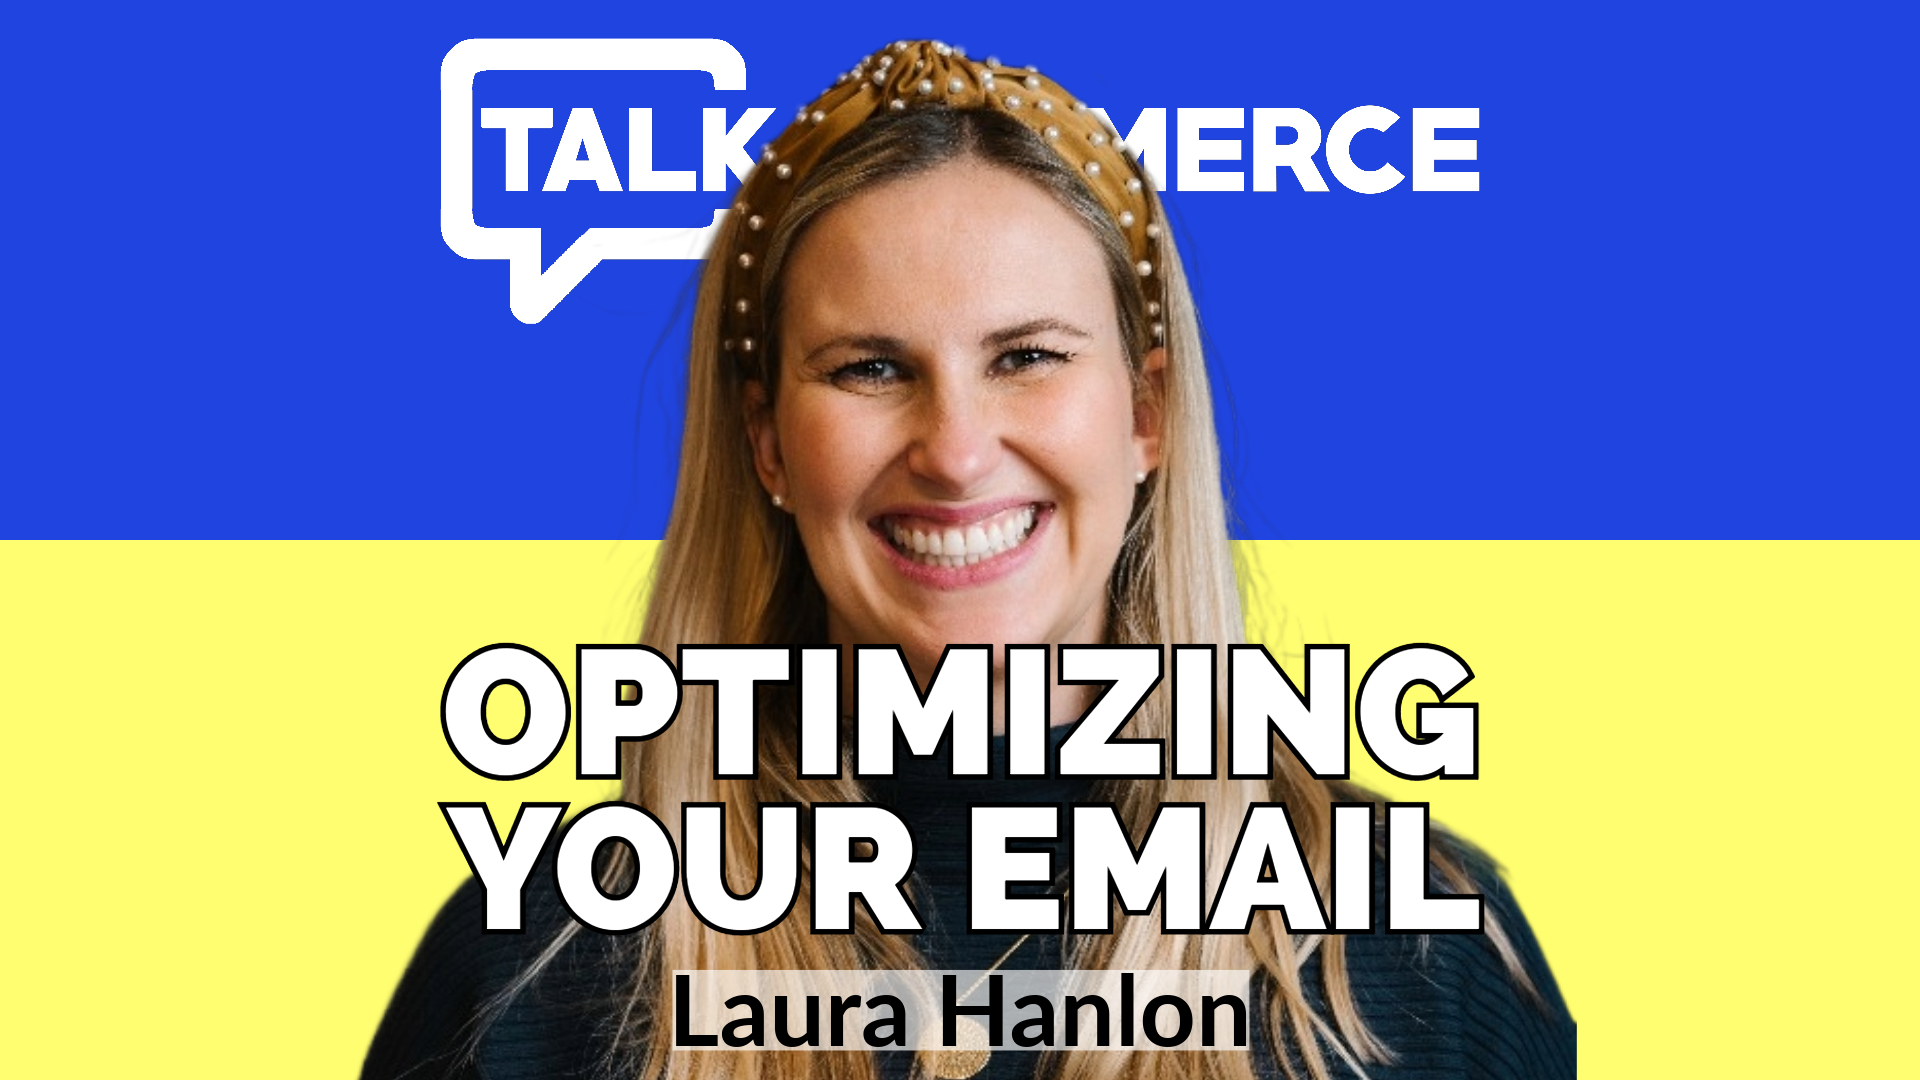 Talk-Commerce Laura Hanlon